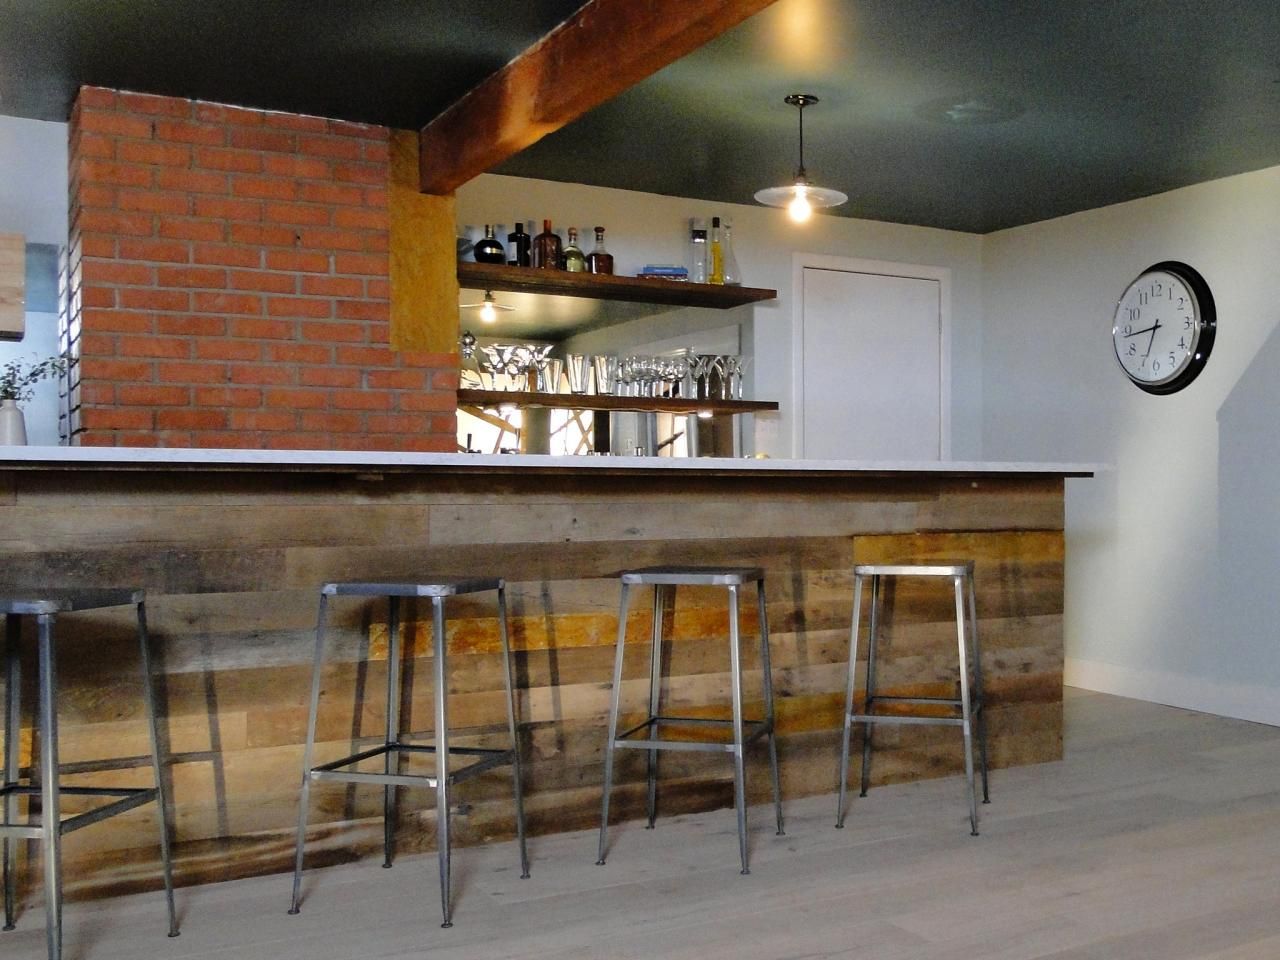 Home Basement Bar Ideas Modern On Home Inside Clever Making Your Shine 0 Basement Bar Ideas